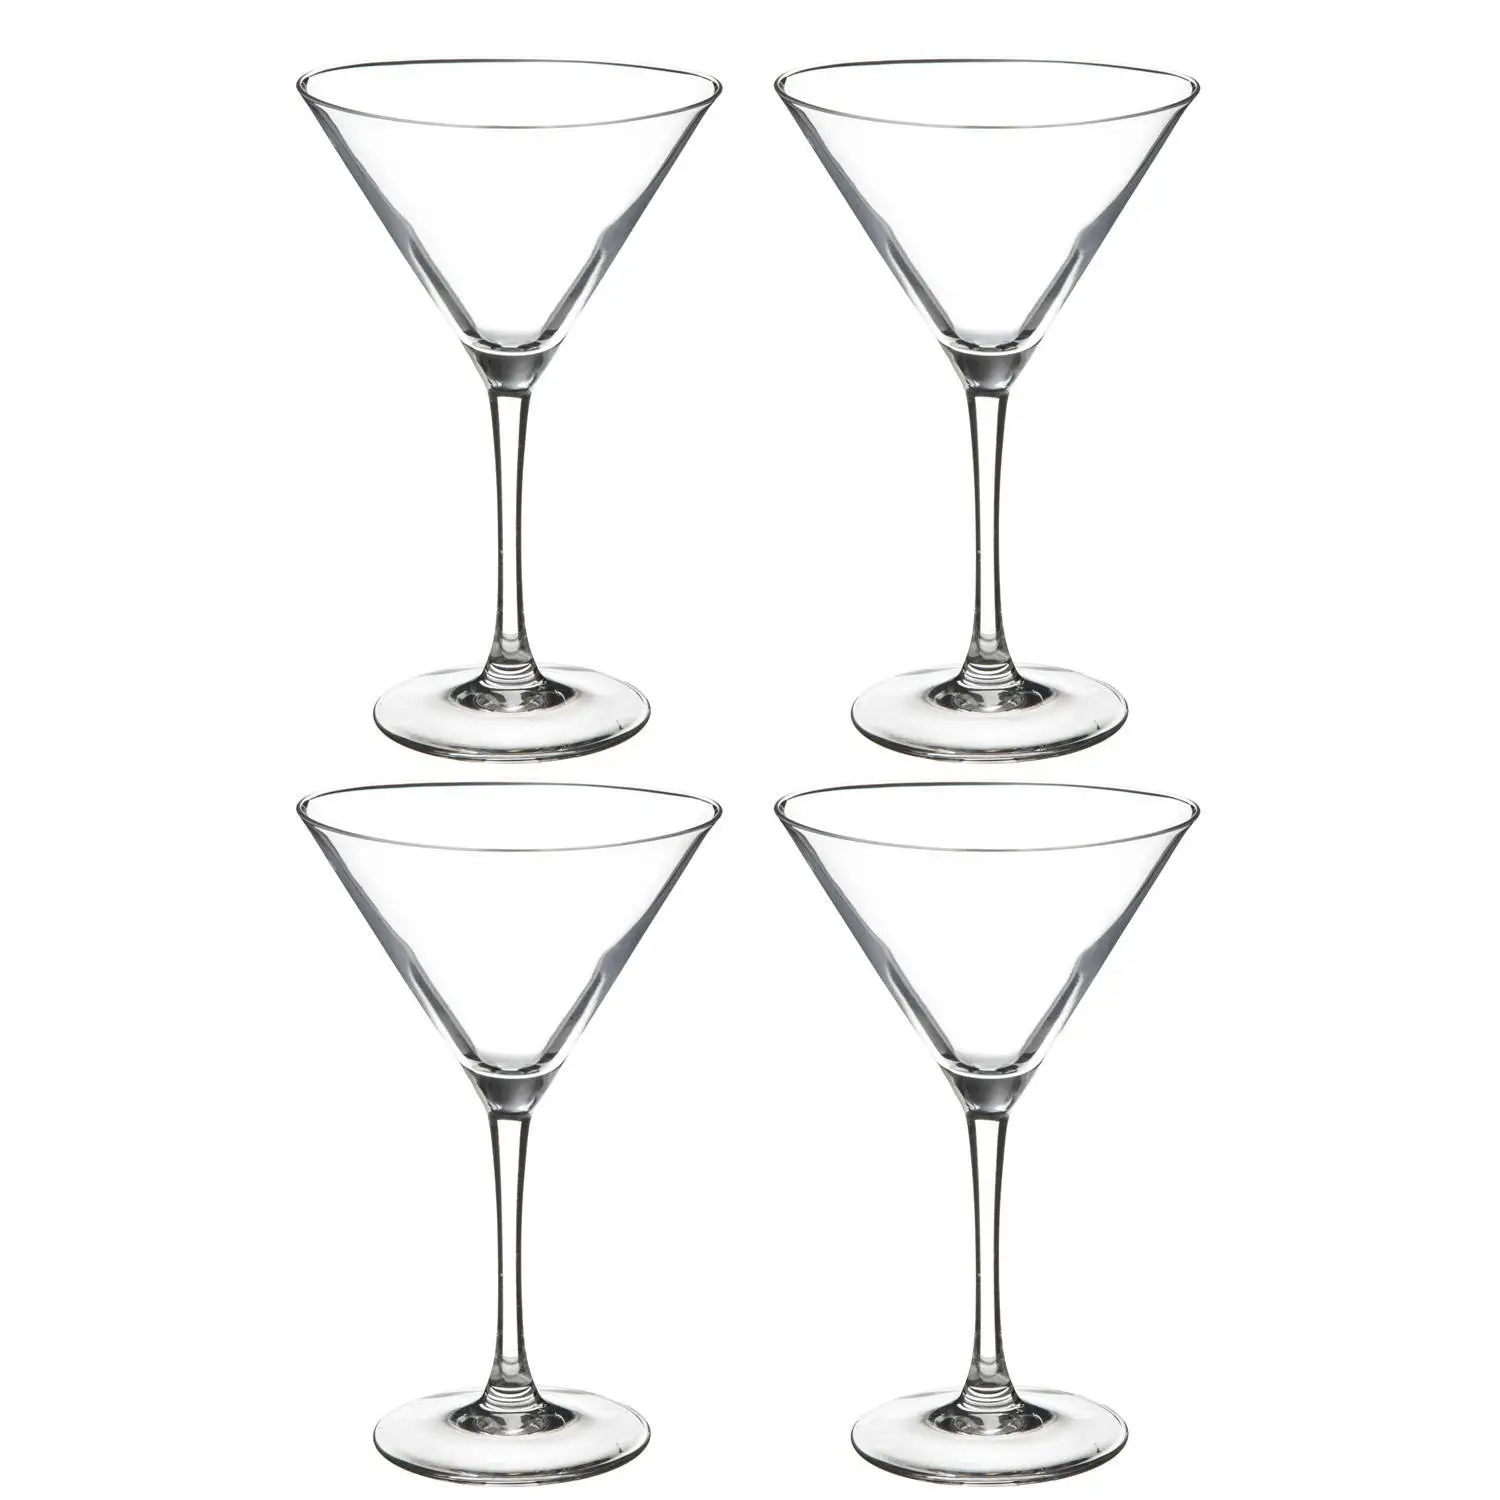 4er-Set, Cocktail-Gl盲ser, 300 ml